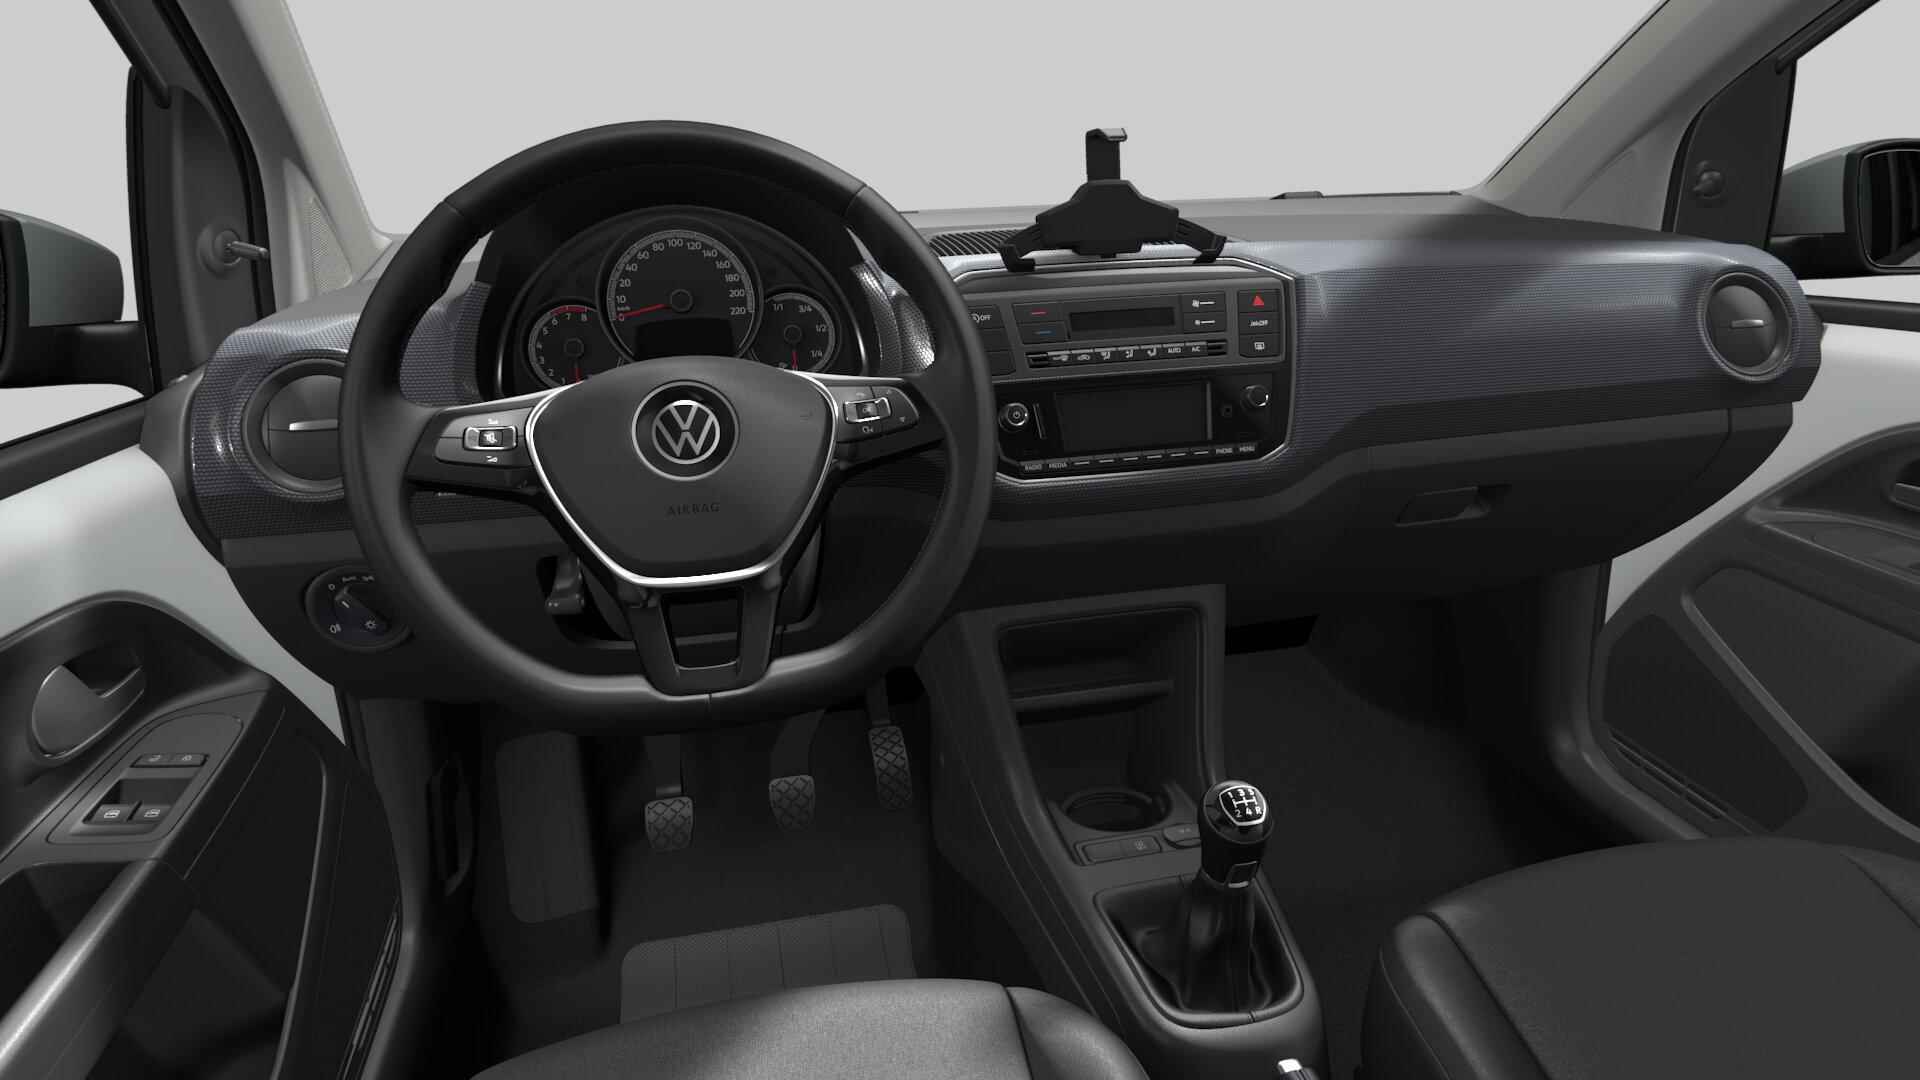 Volkswagen up! 1.0 MPI 65 5MT up! - 9/9